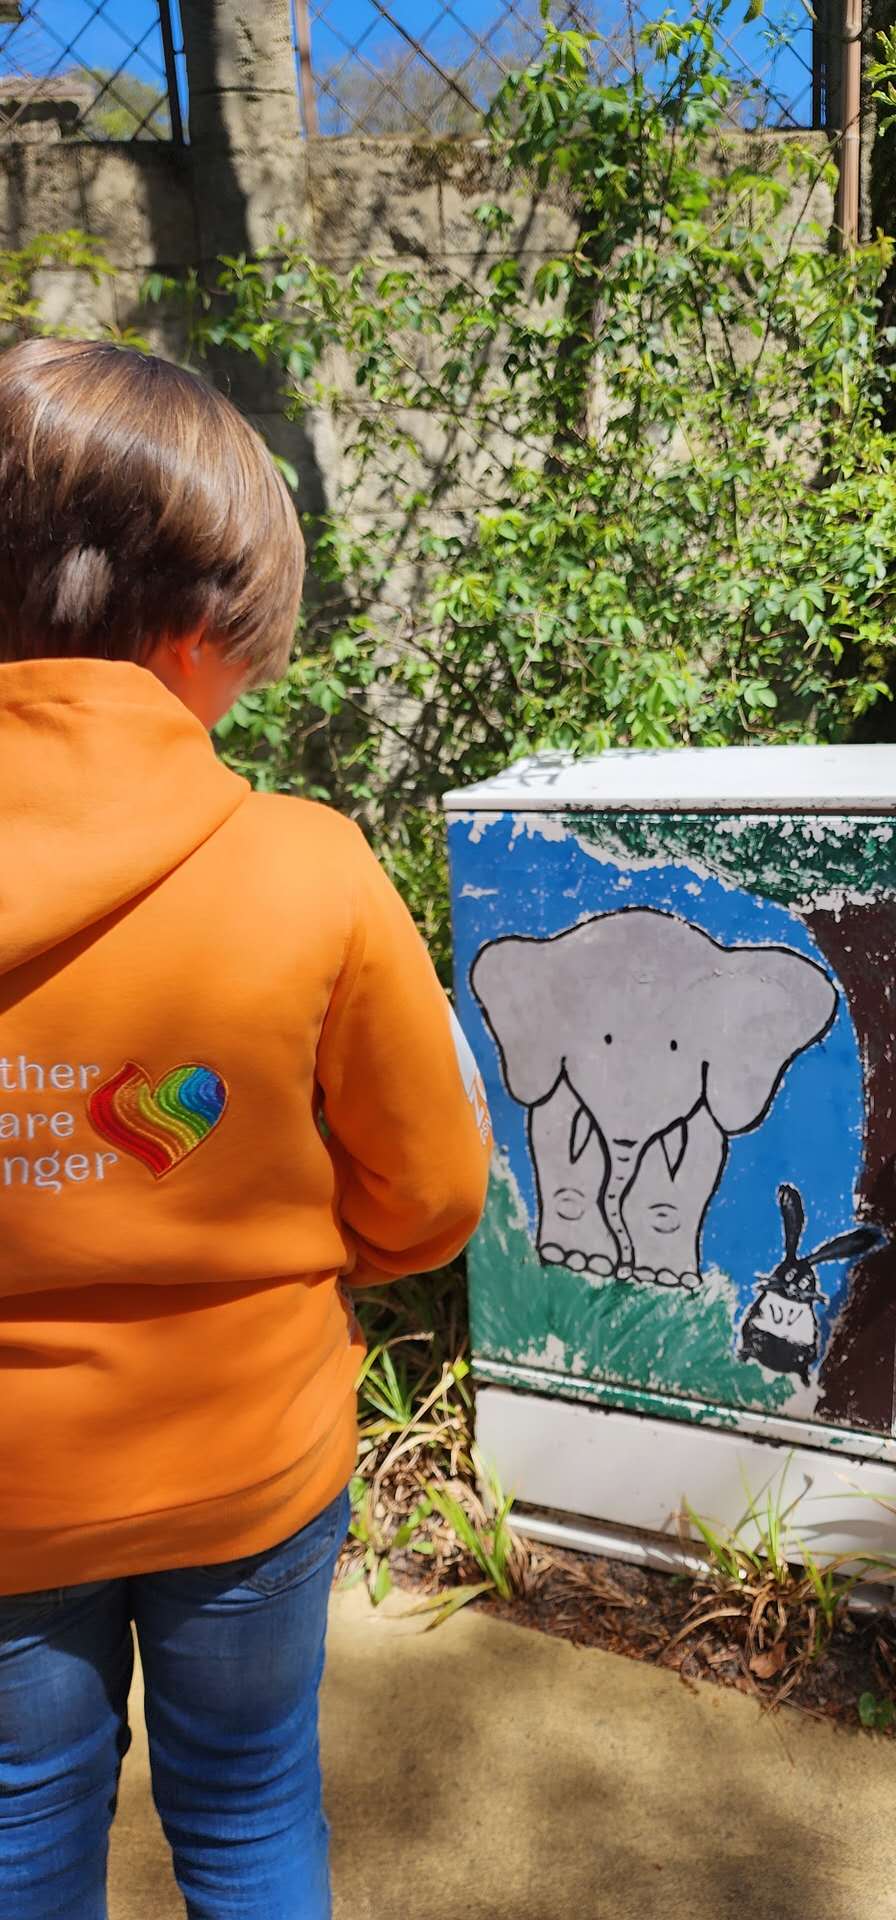 Elephan-Care Hoodie Sunset Orange for Kids & Teens Together we are Stronger UG